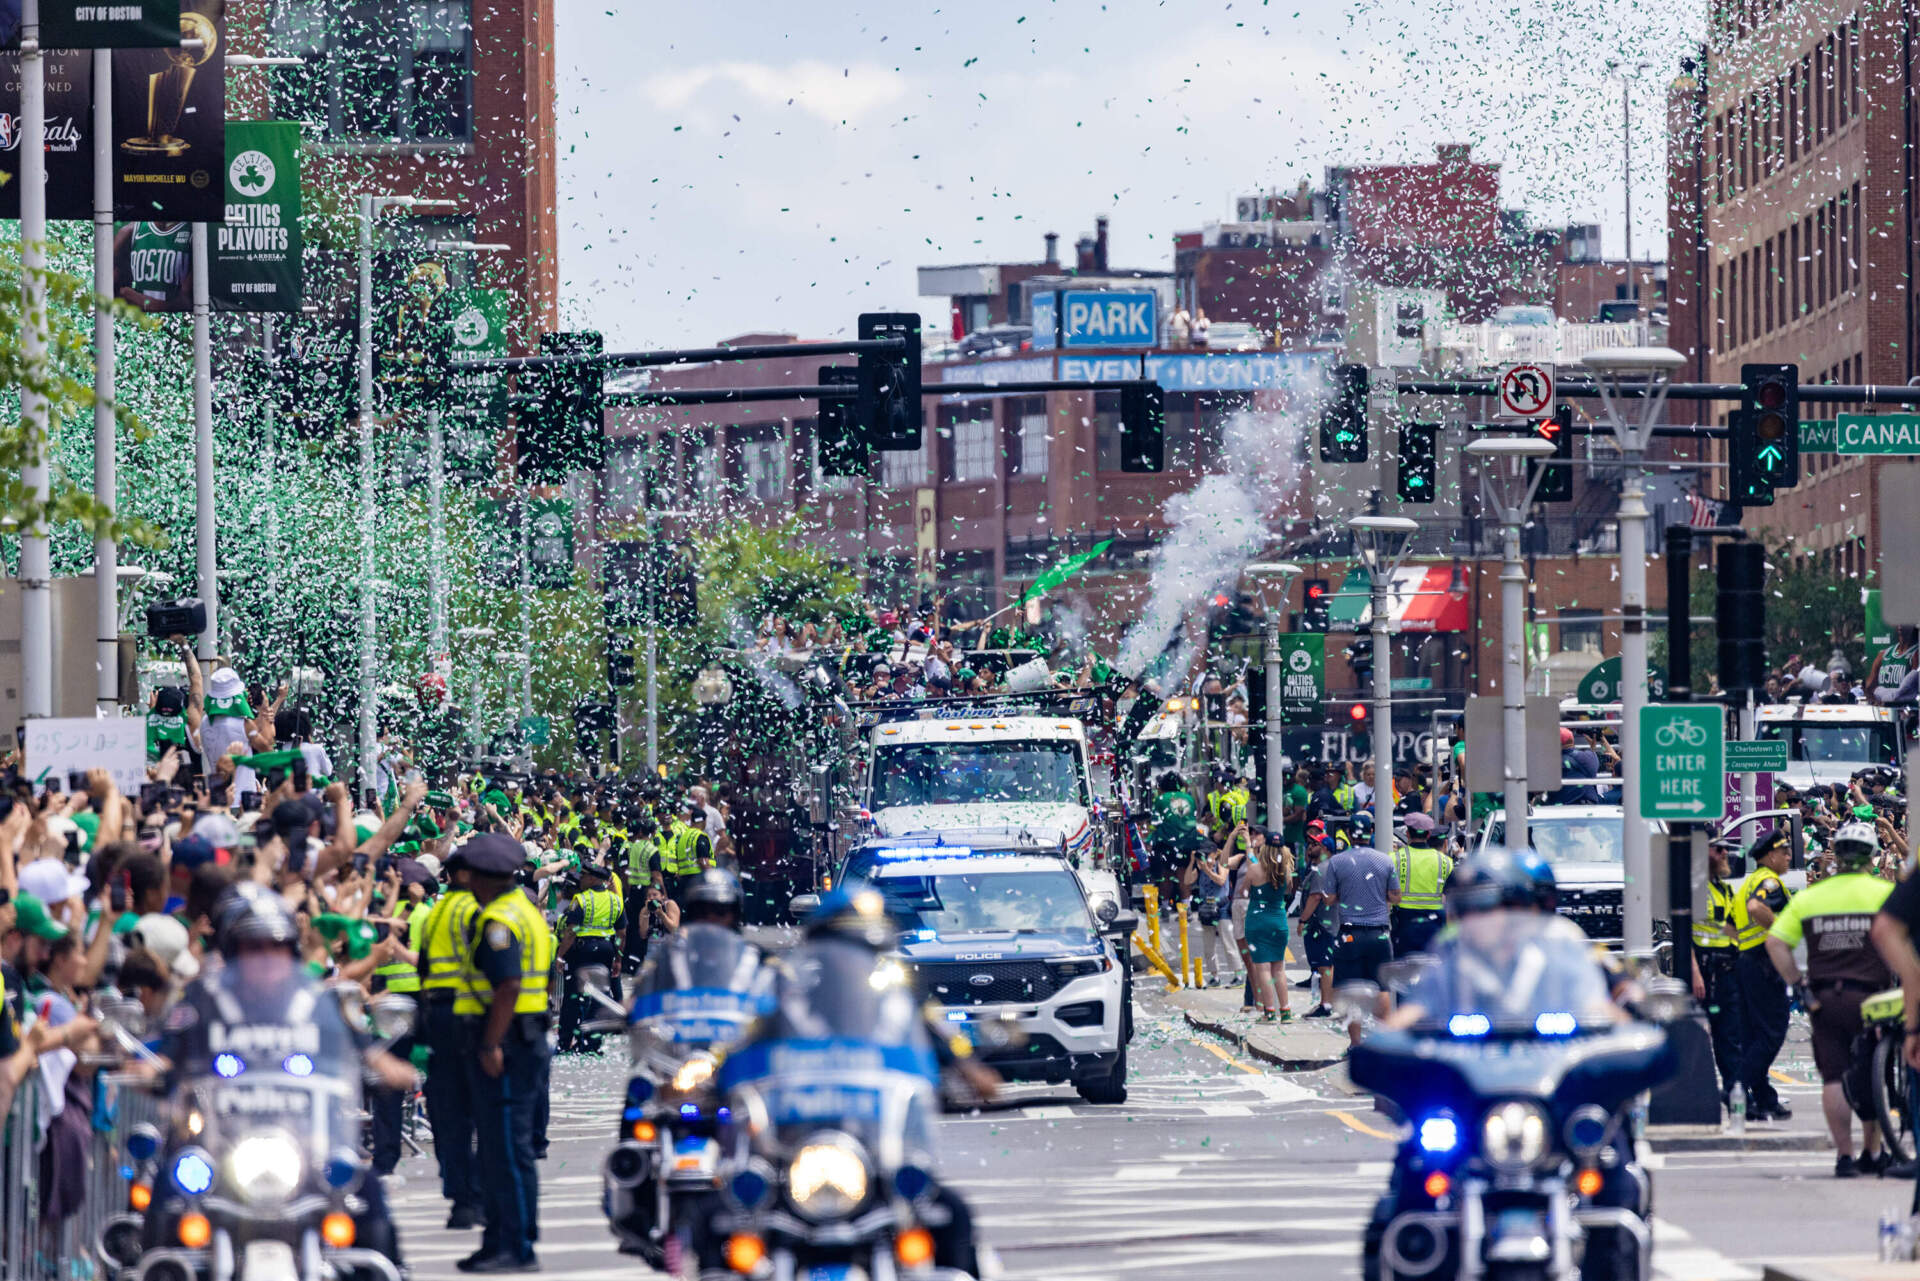 The Celtics rolling rally makes its way down Causeway Street. (Jesse Costa/WBUR)